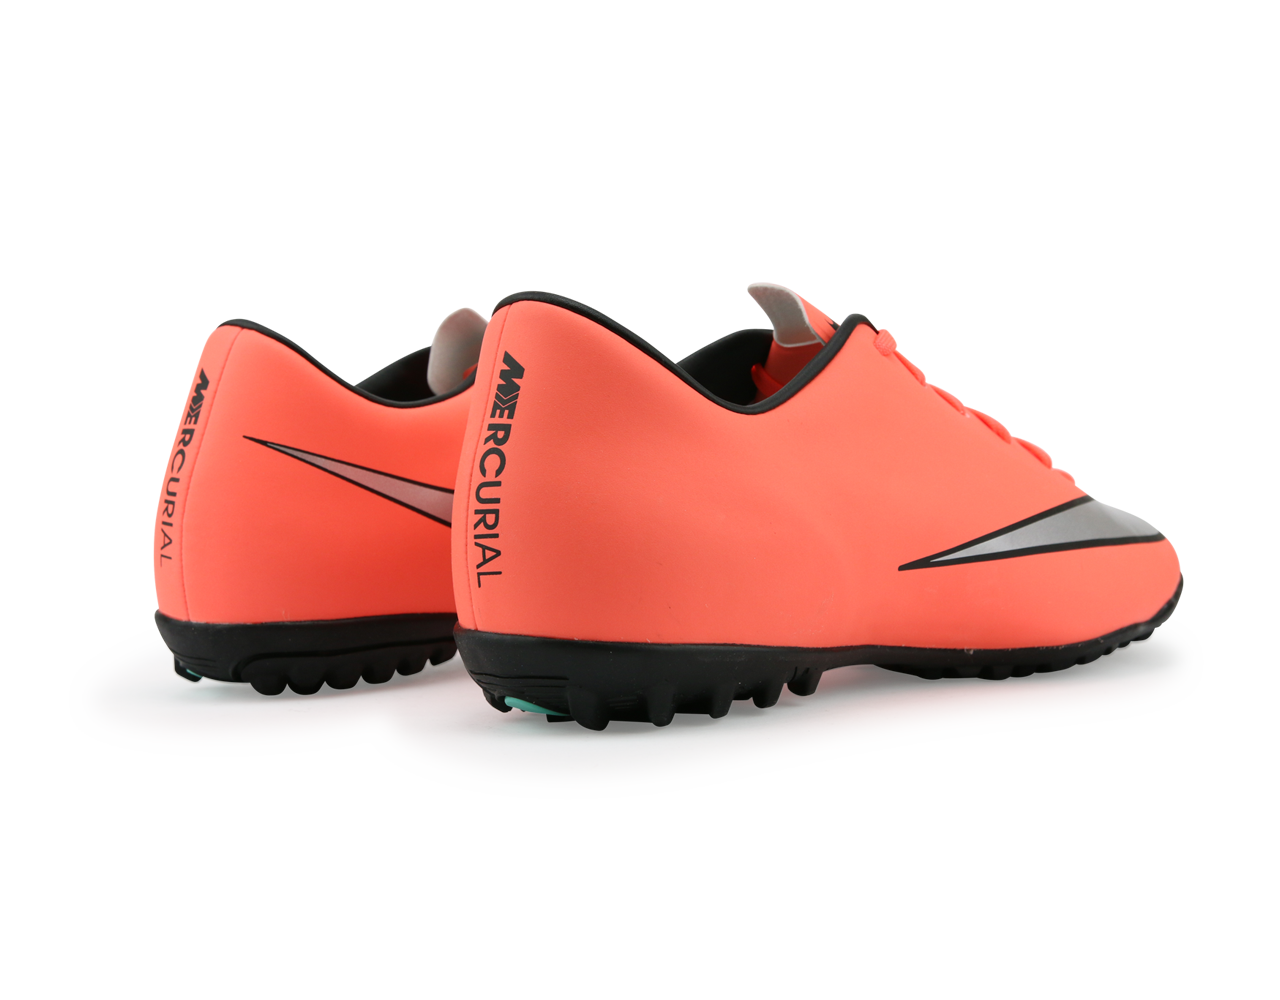 Nike Men's Mercurial Victory V Turf Soccer Shoes Bright Mango/Metallic Slivr/Hyper Turqoise